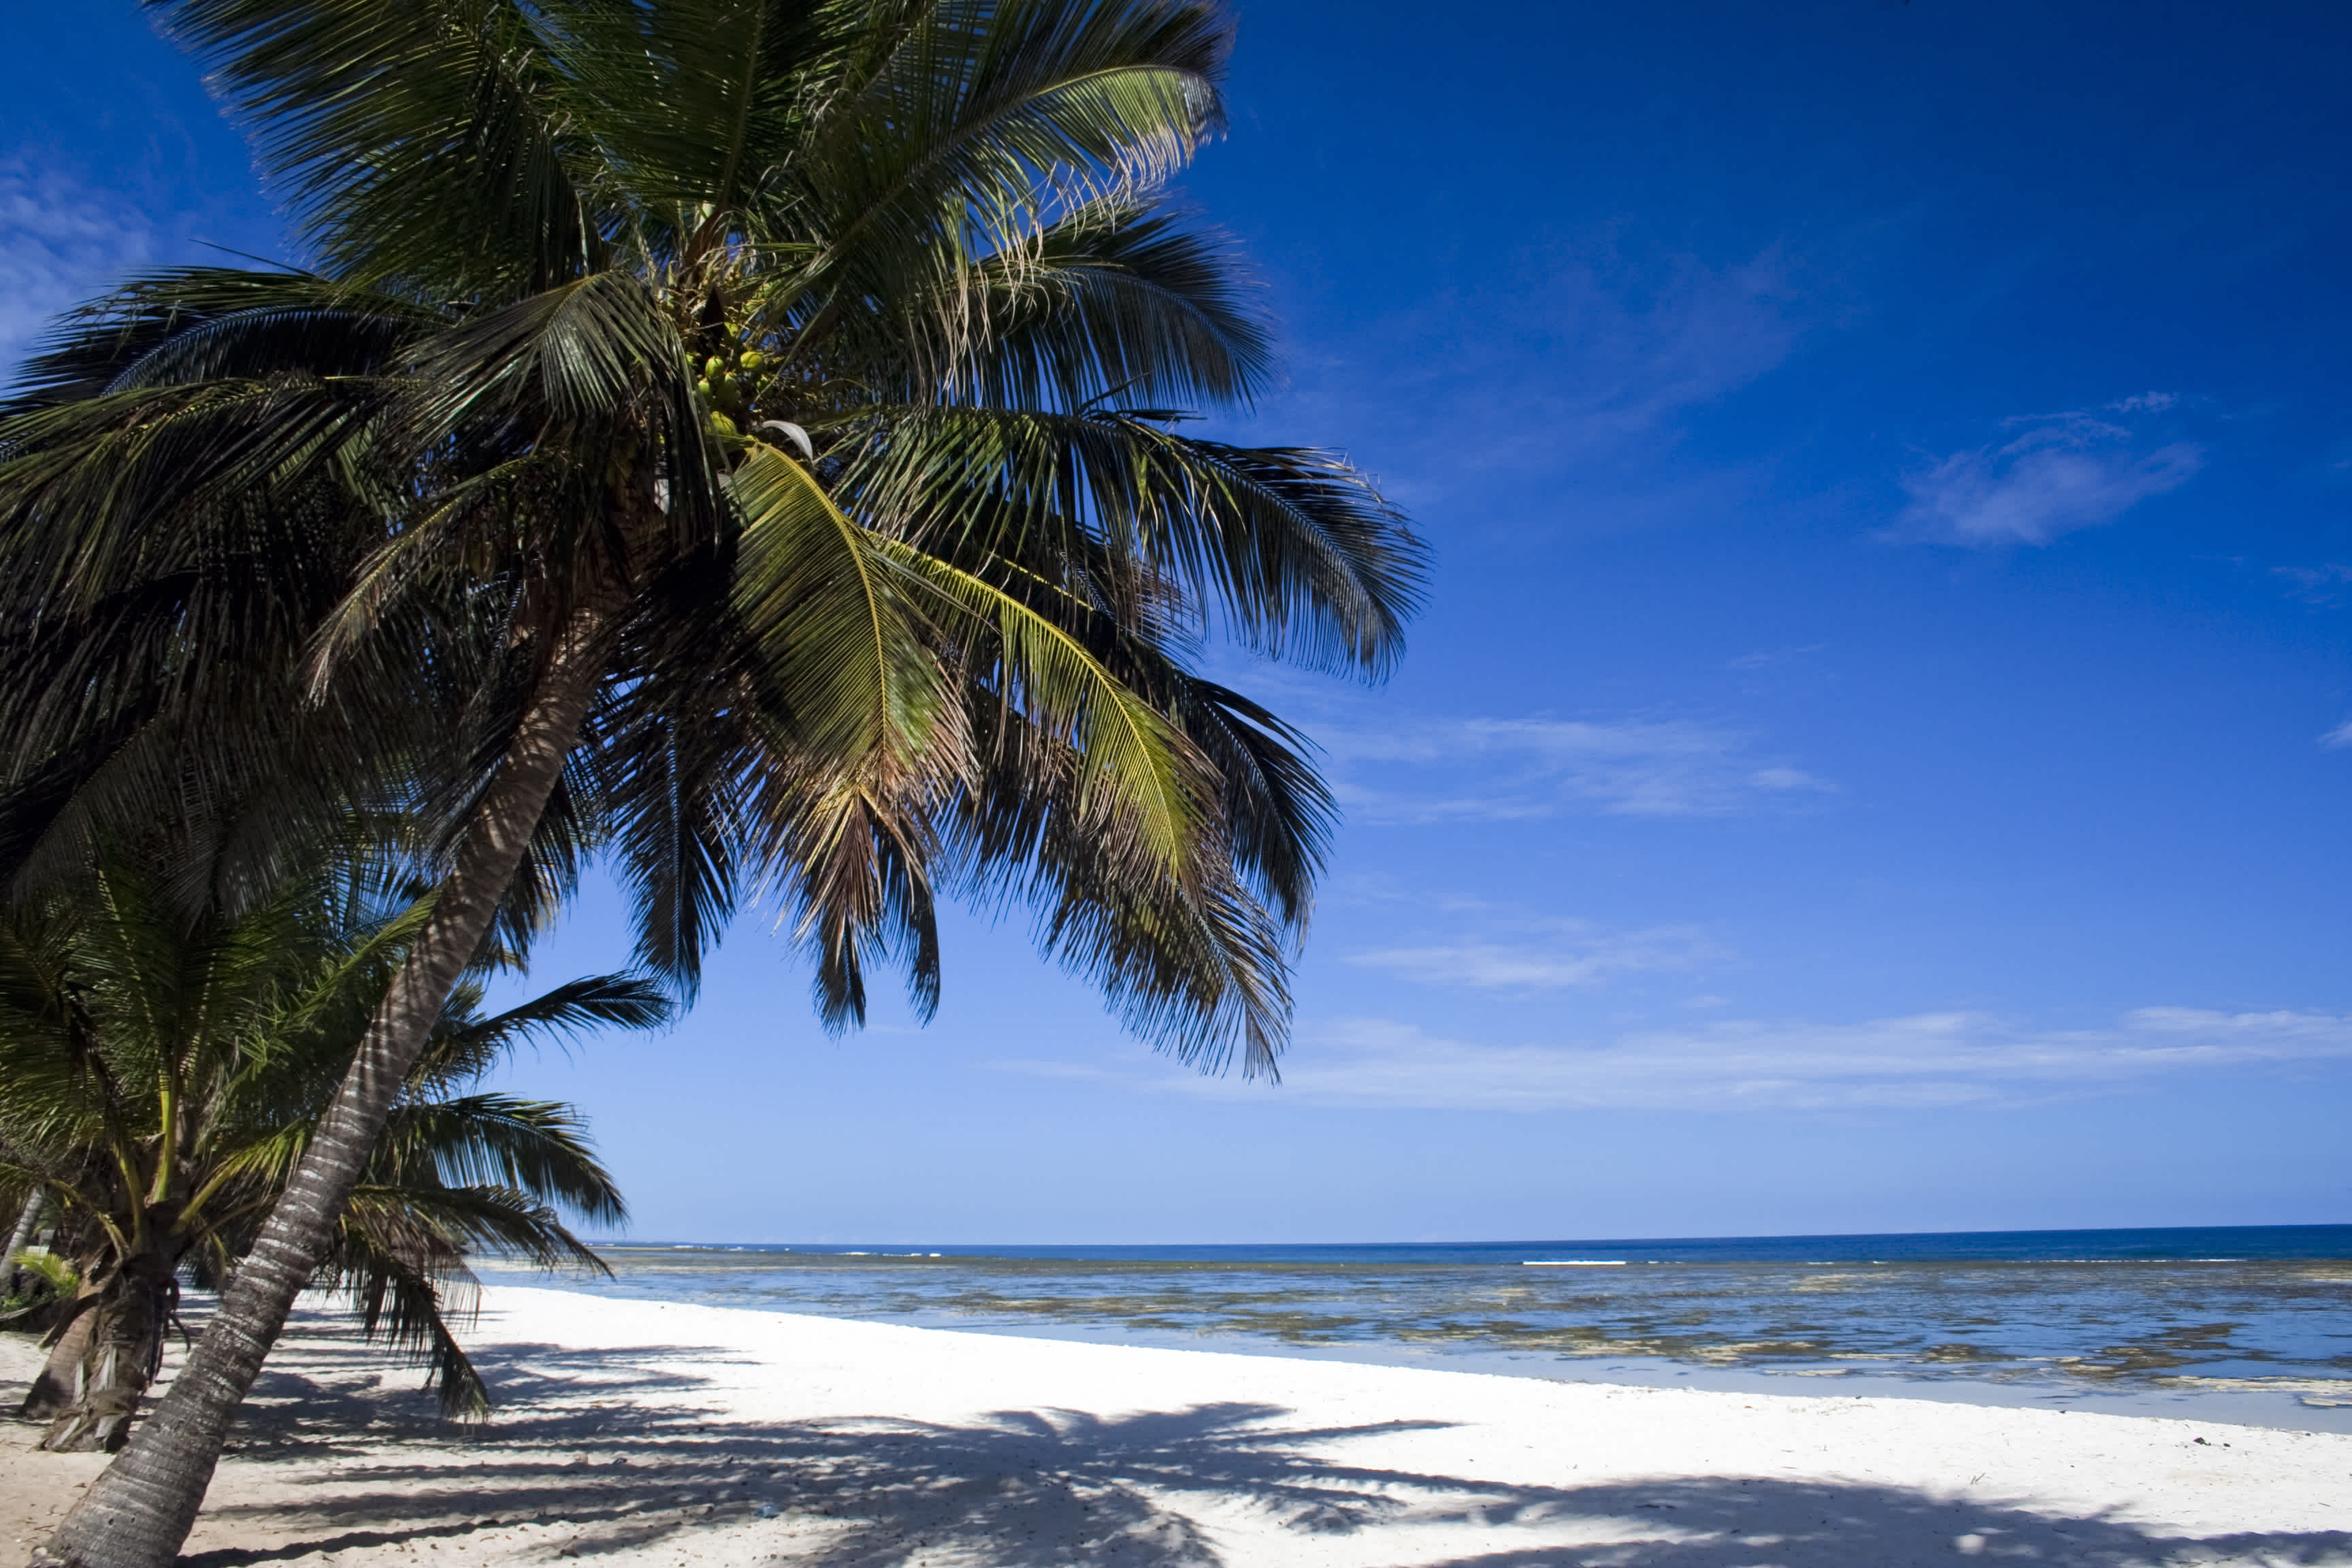 Discover beautiful beaches on a Zanzibar vacation